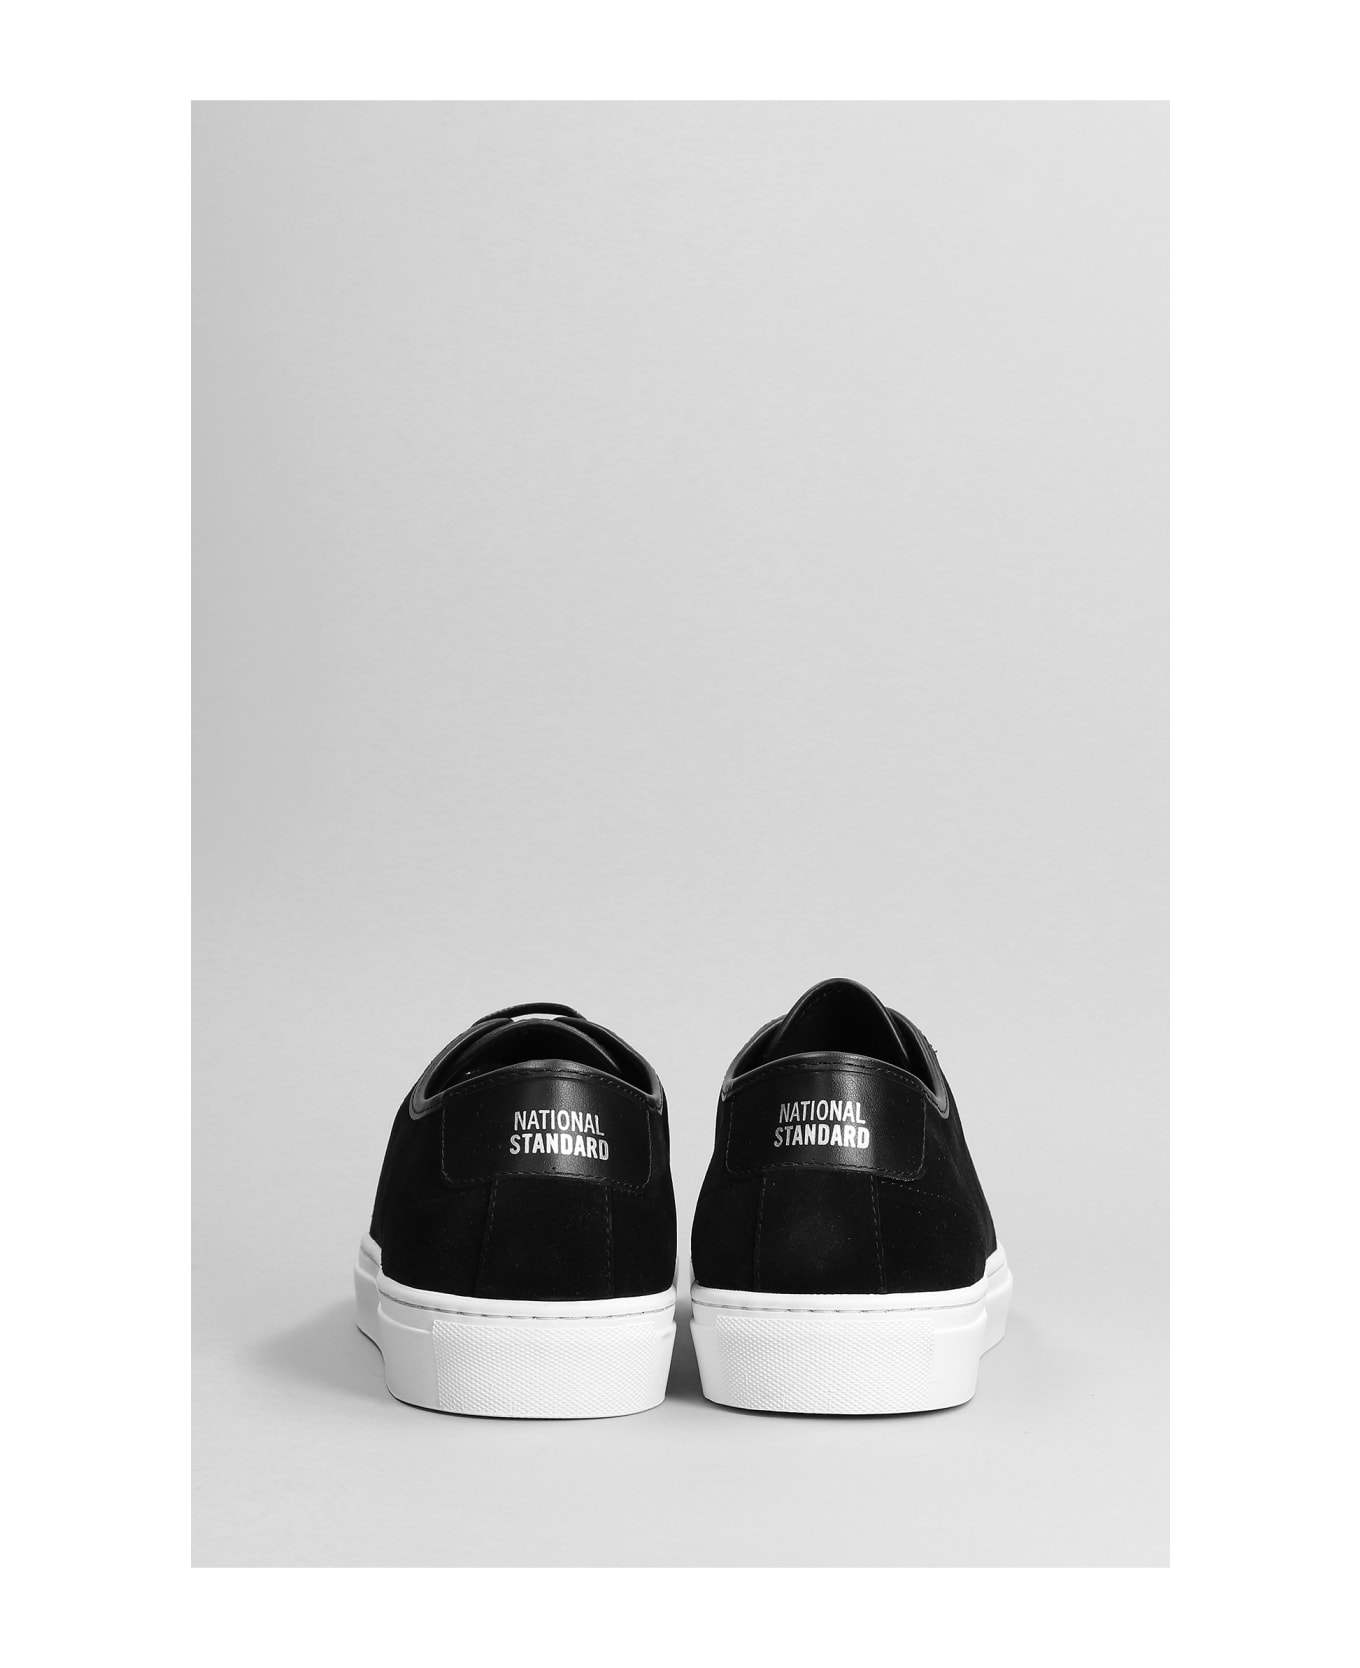 National Standard Edition 3 Sneakers In Black Suede - black